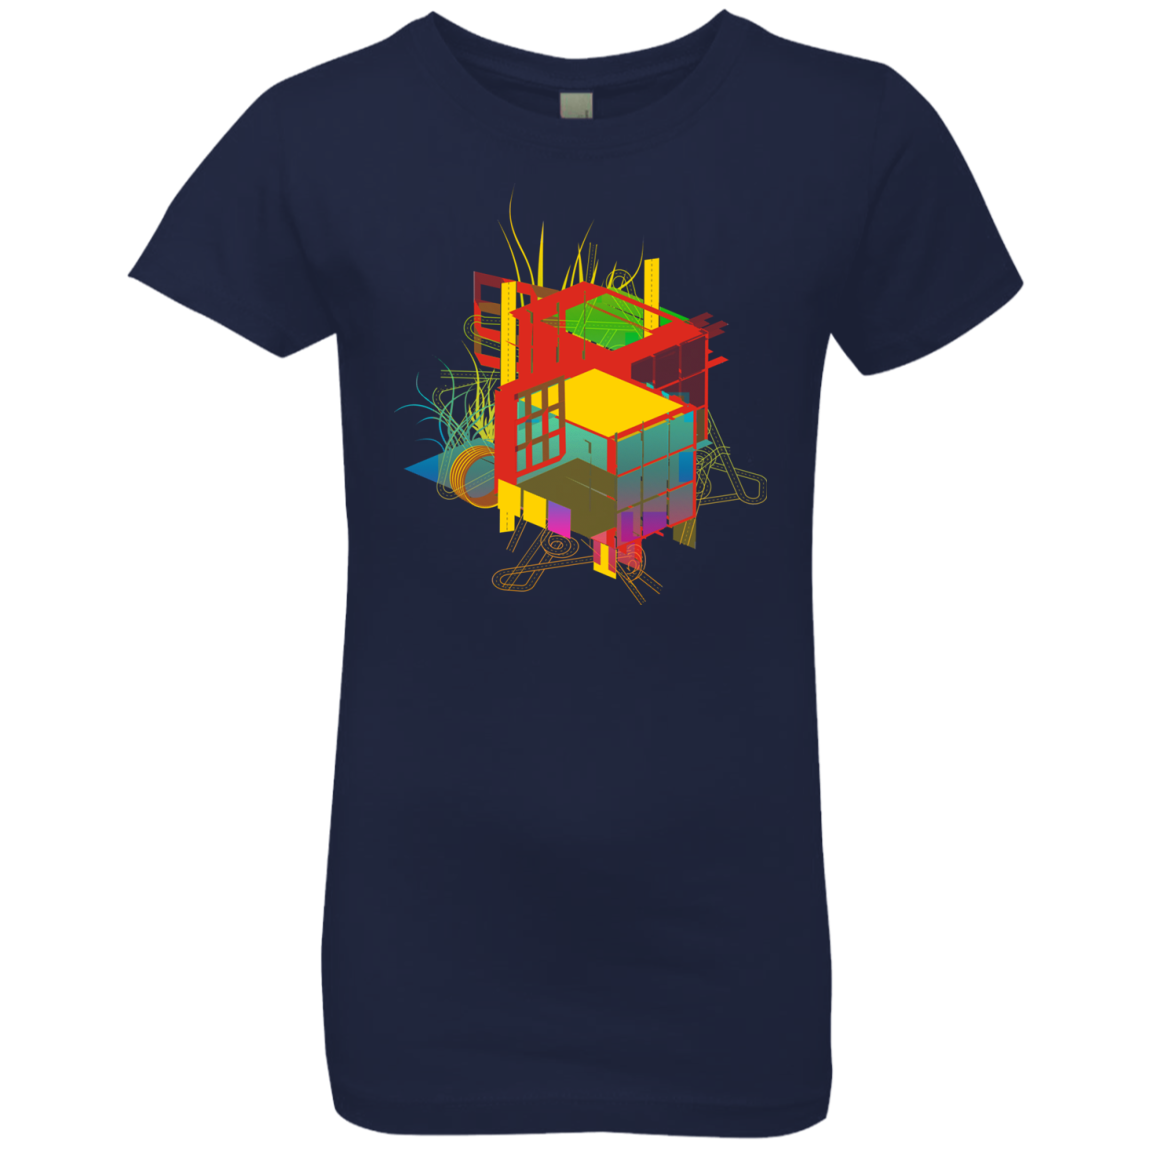 Rubik's Building Girls Premium T-Shirt